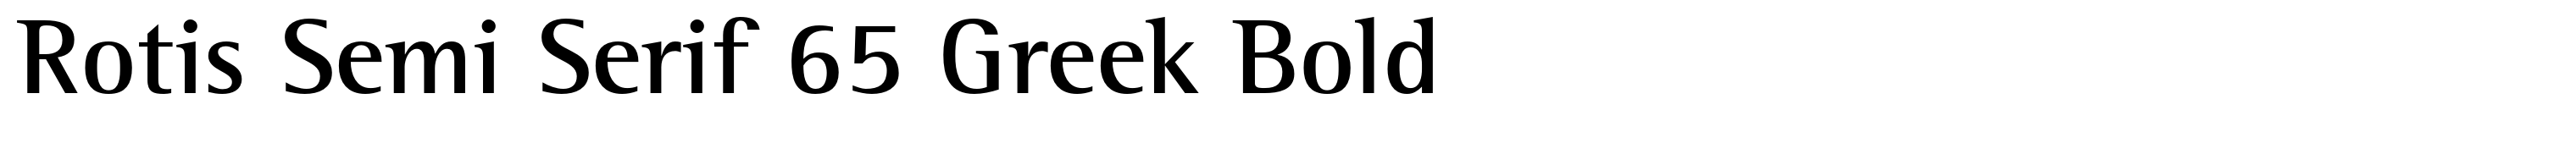 Rotis Semi Serif 65 Greek Bold